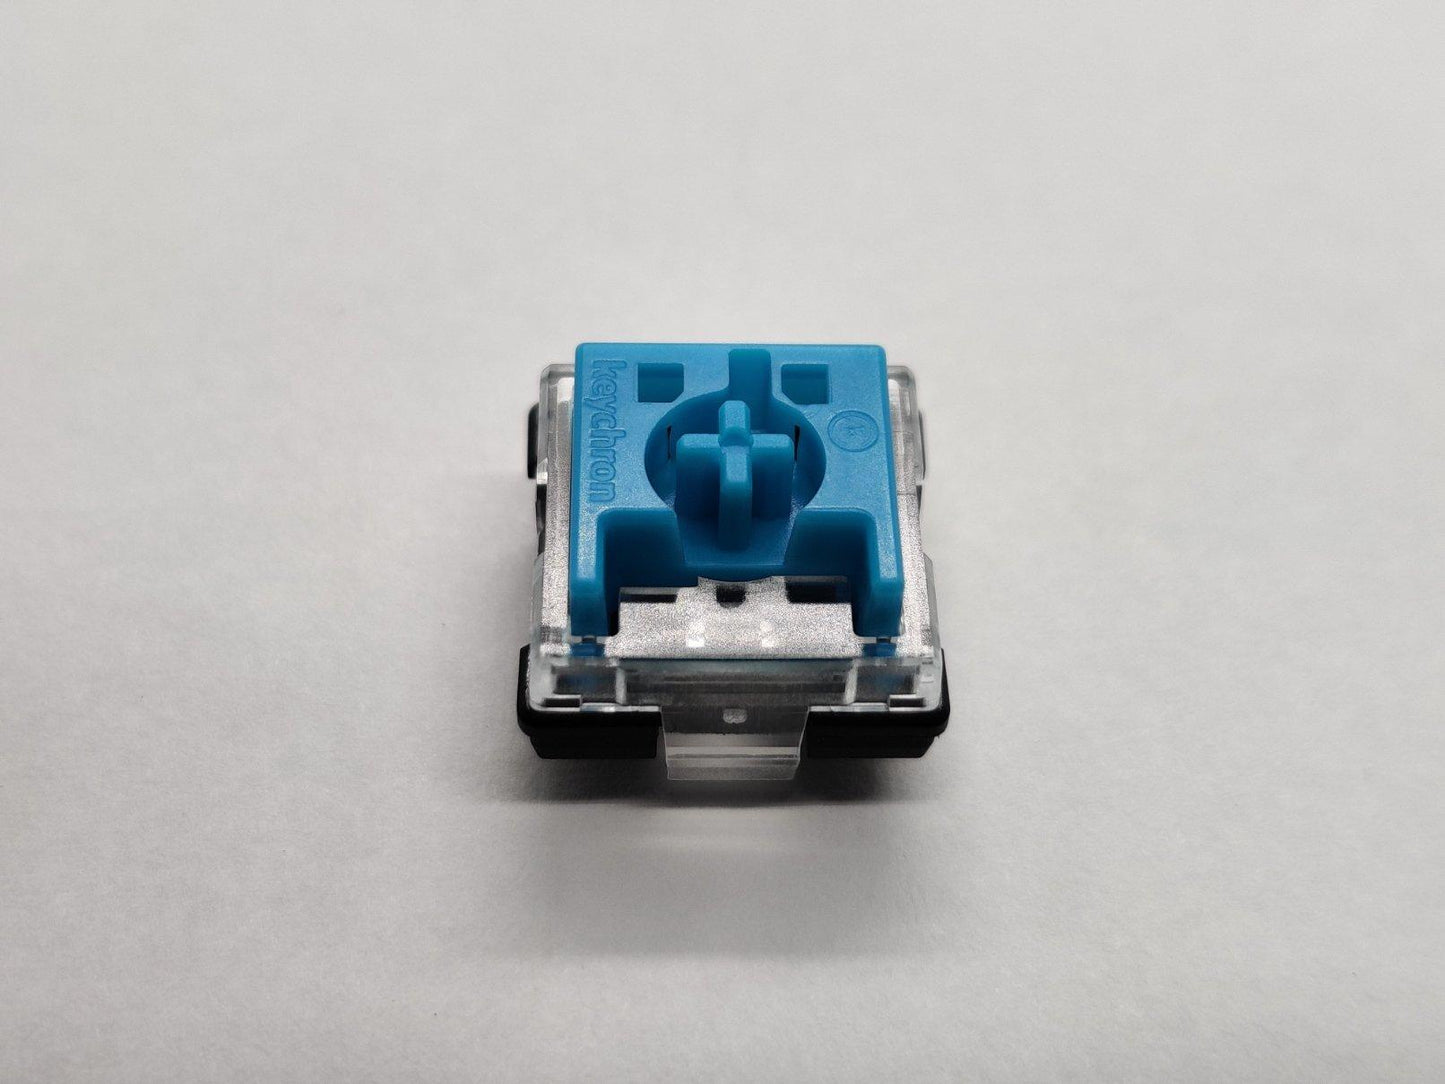 Keychron Low Profile Optical Blue